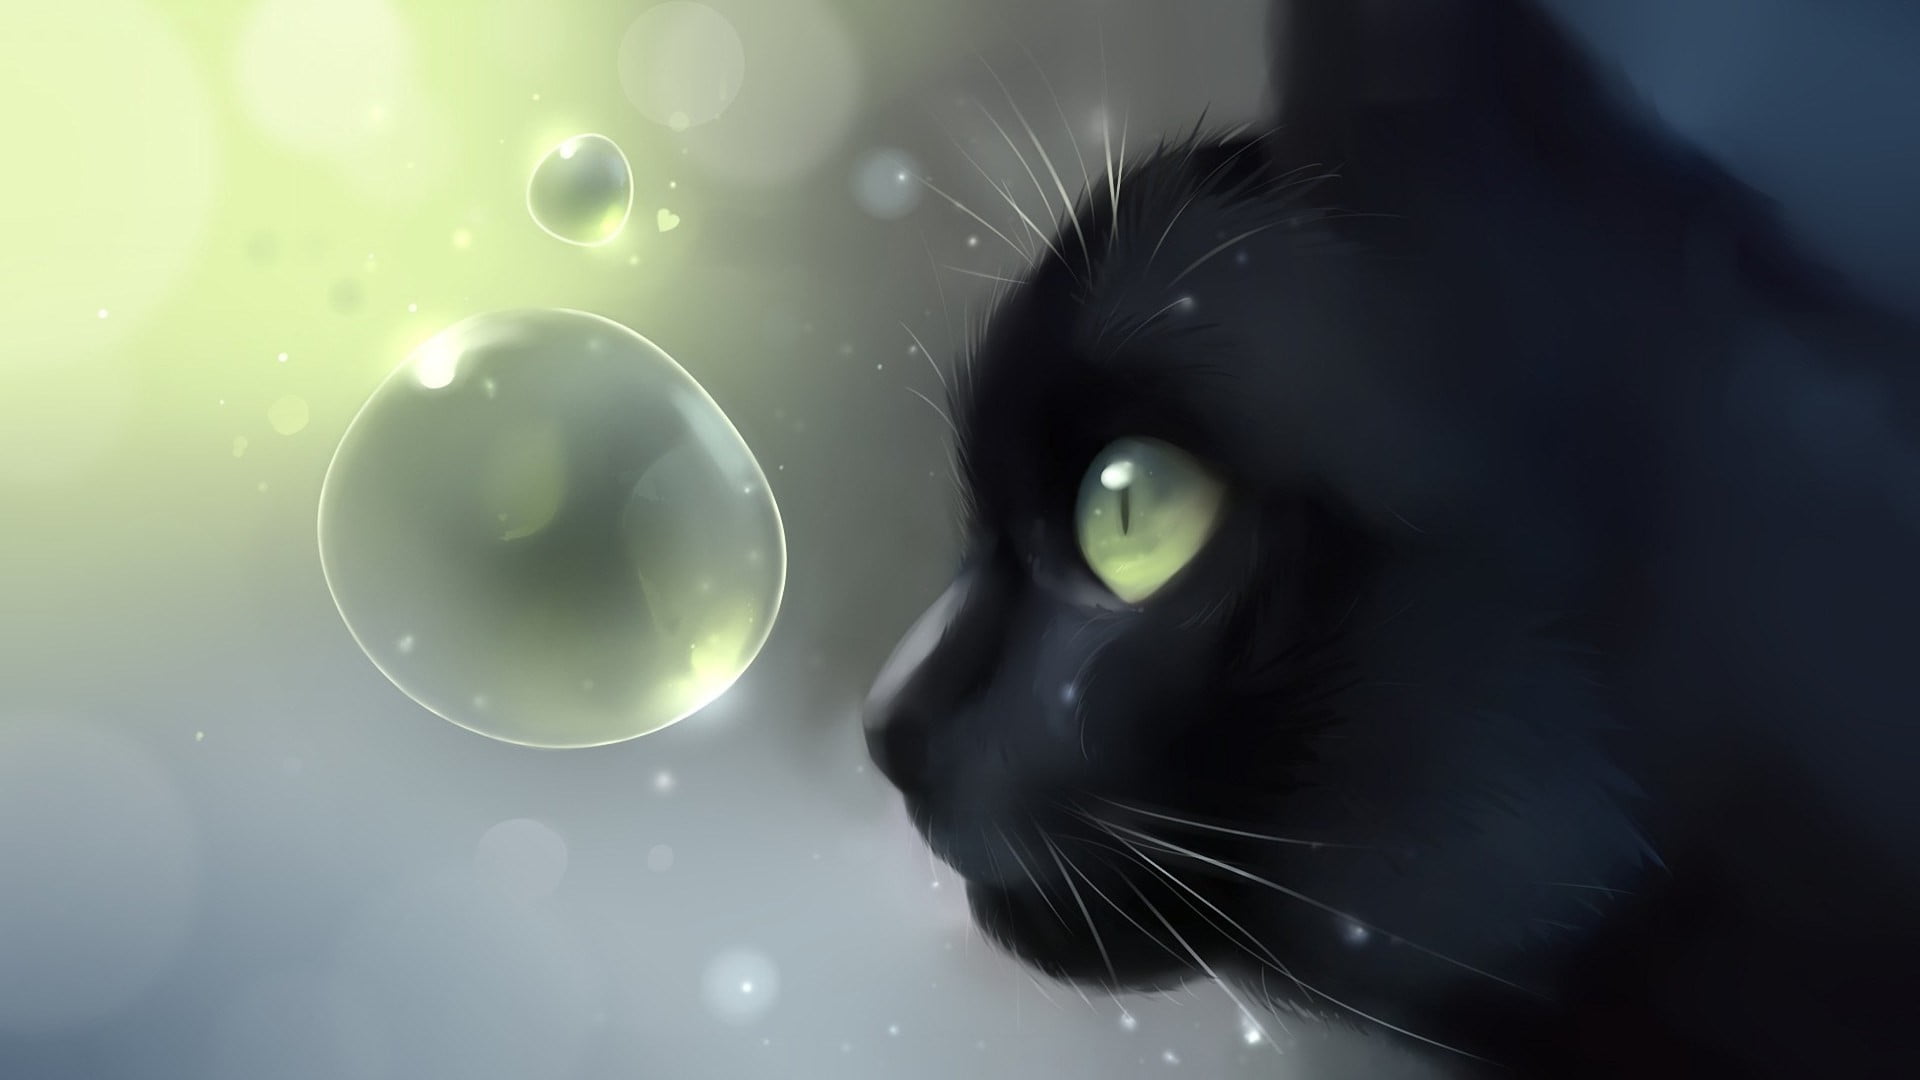 black cat illustration, closeup photo of black cap near clear bubble